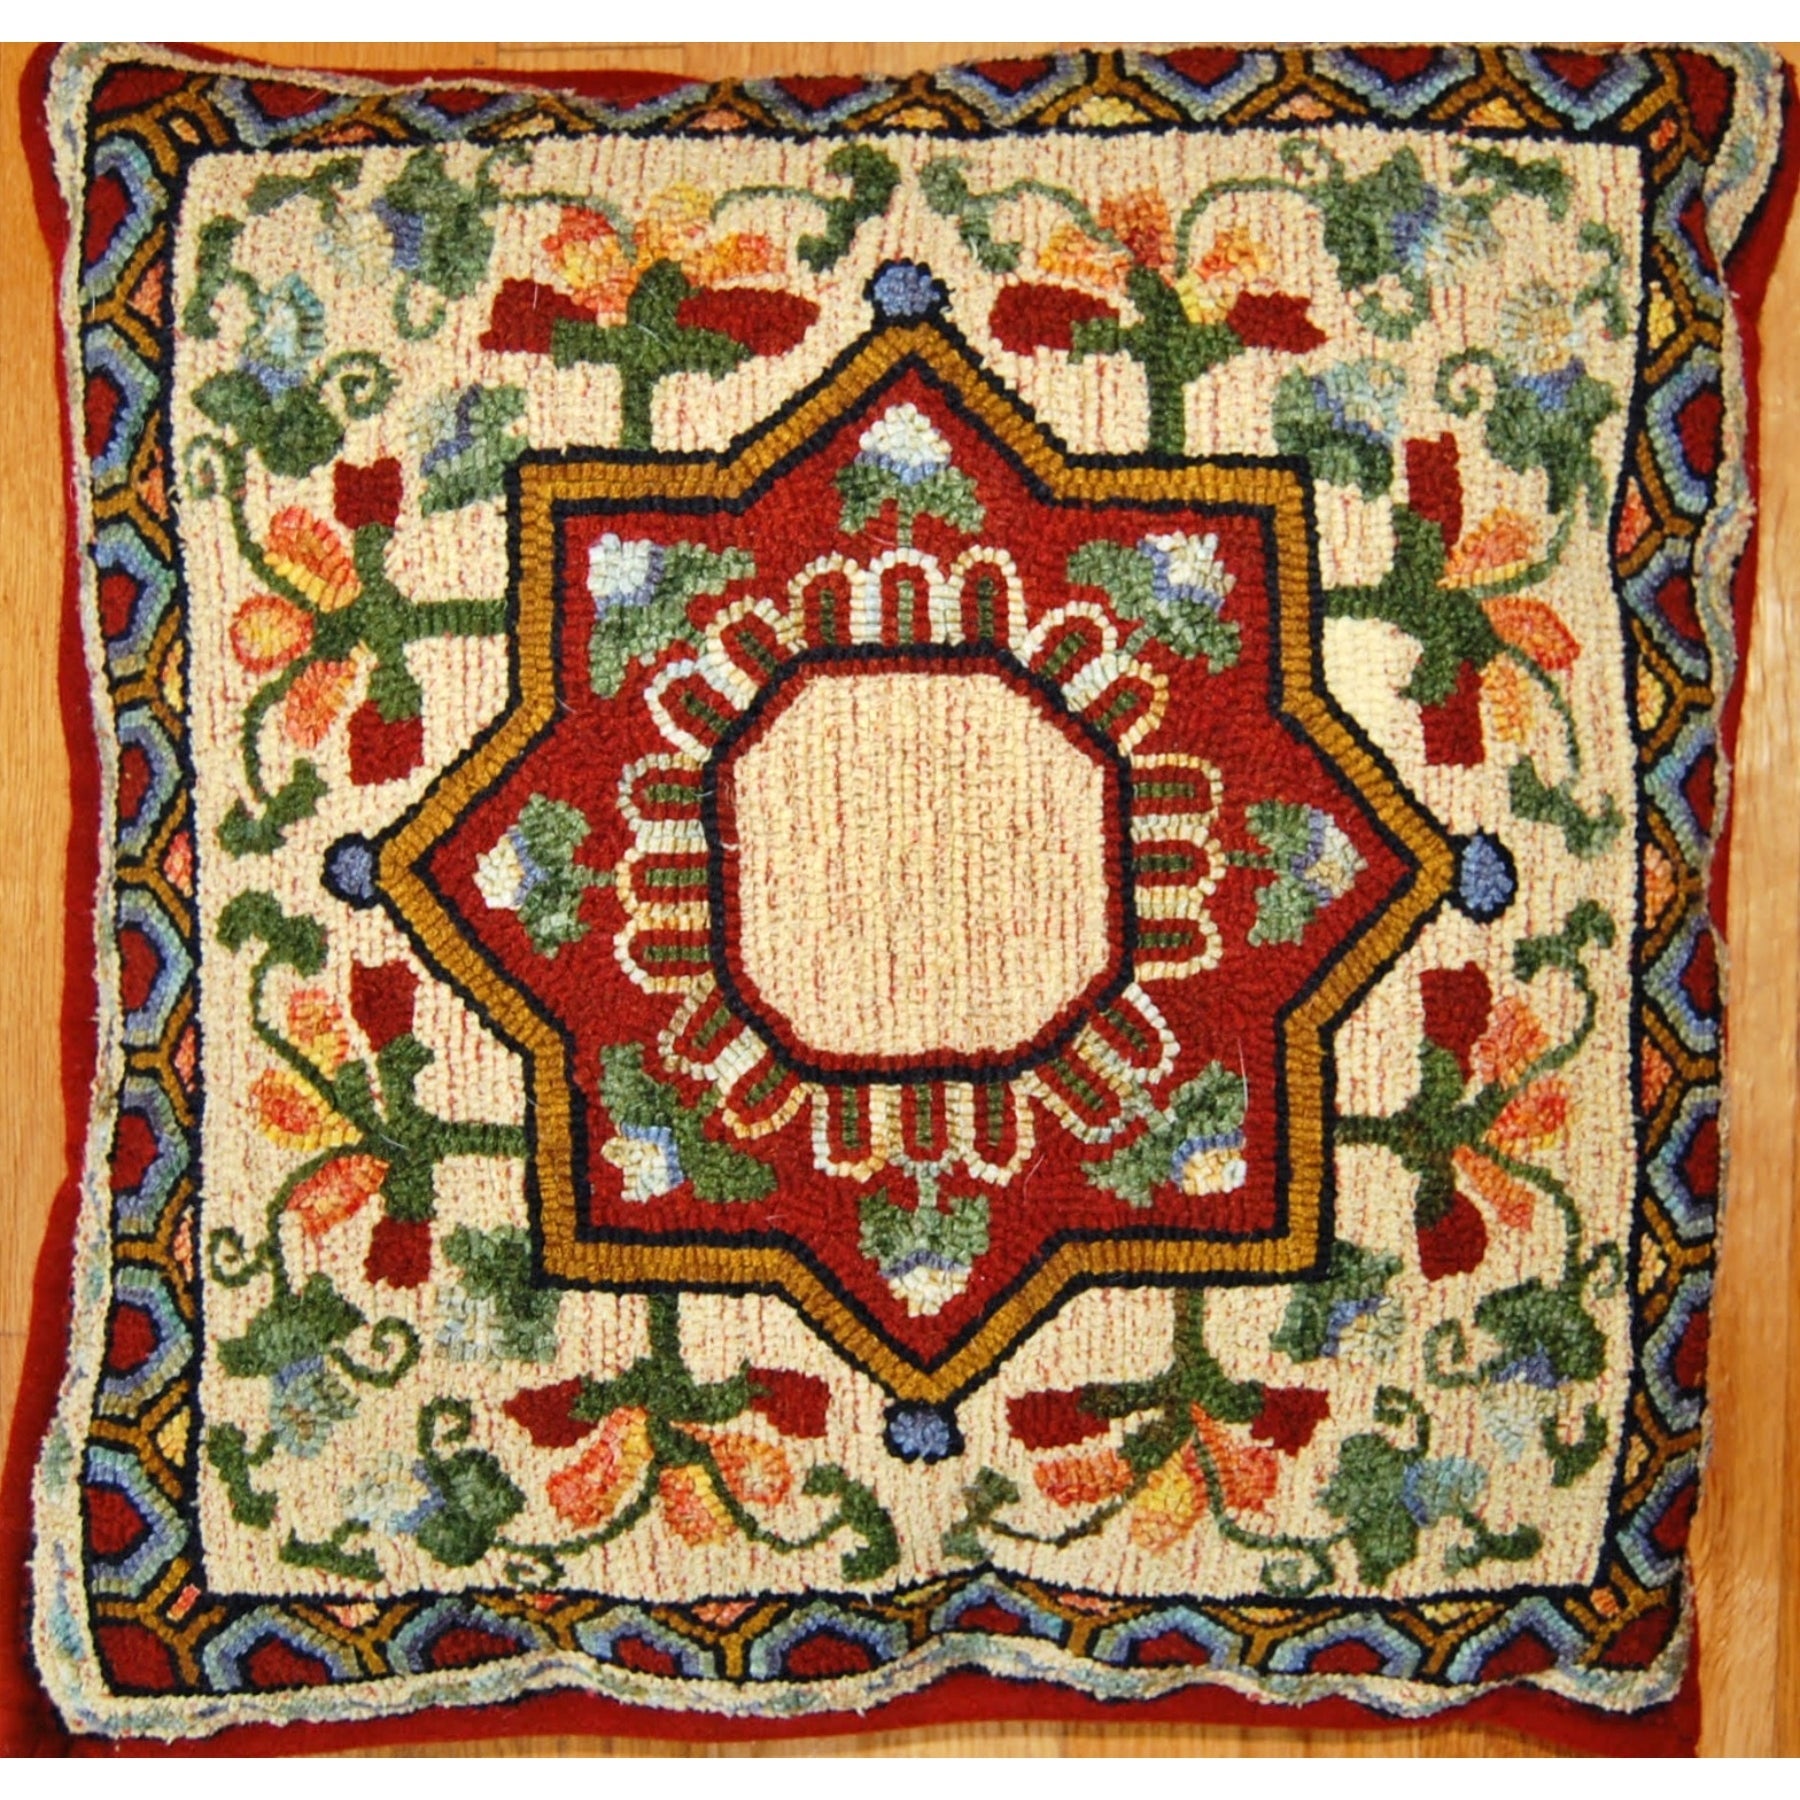 Herez, rug hooked by Dinah Kretschmer